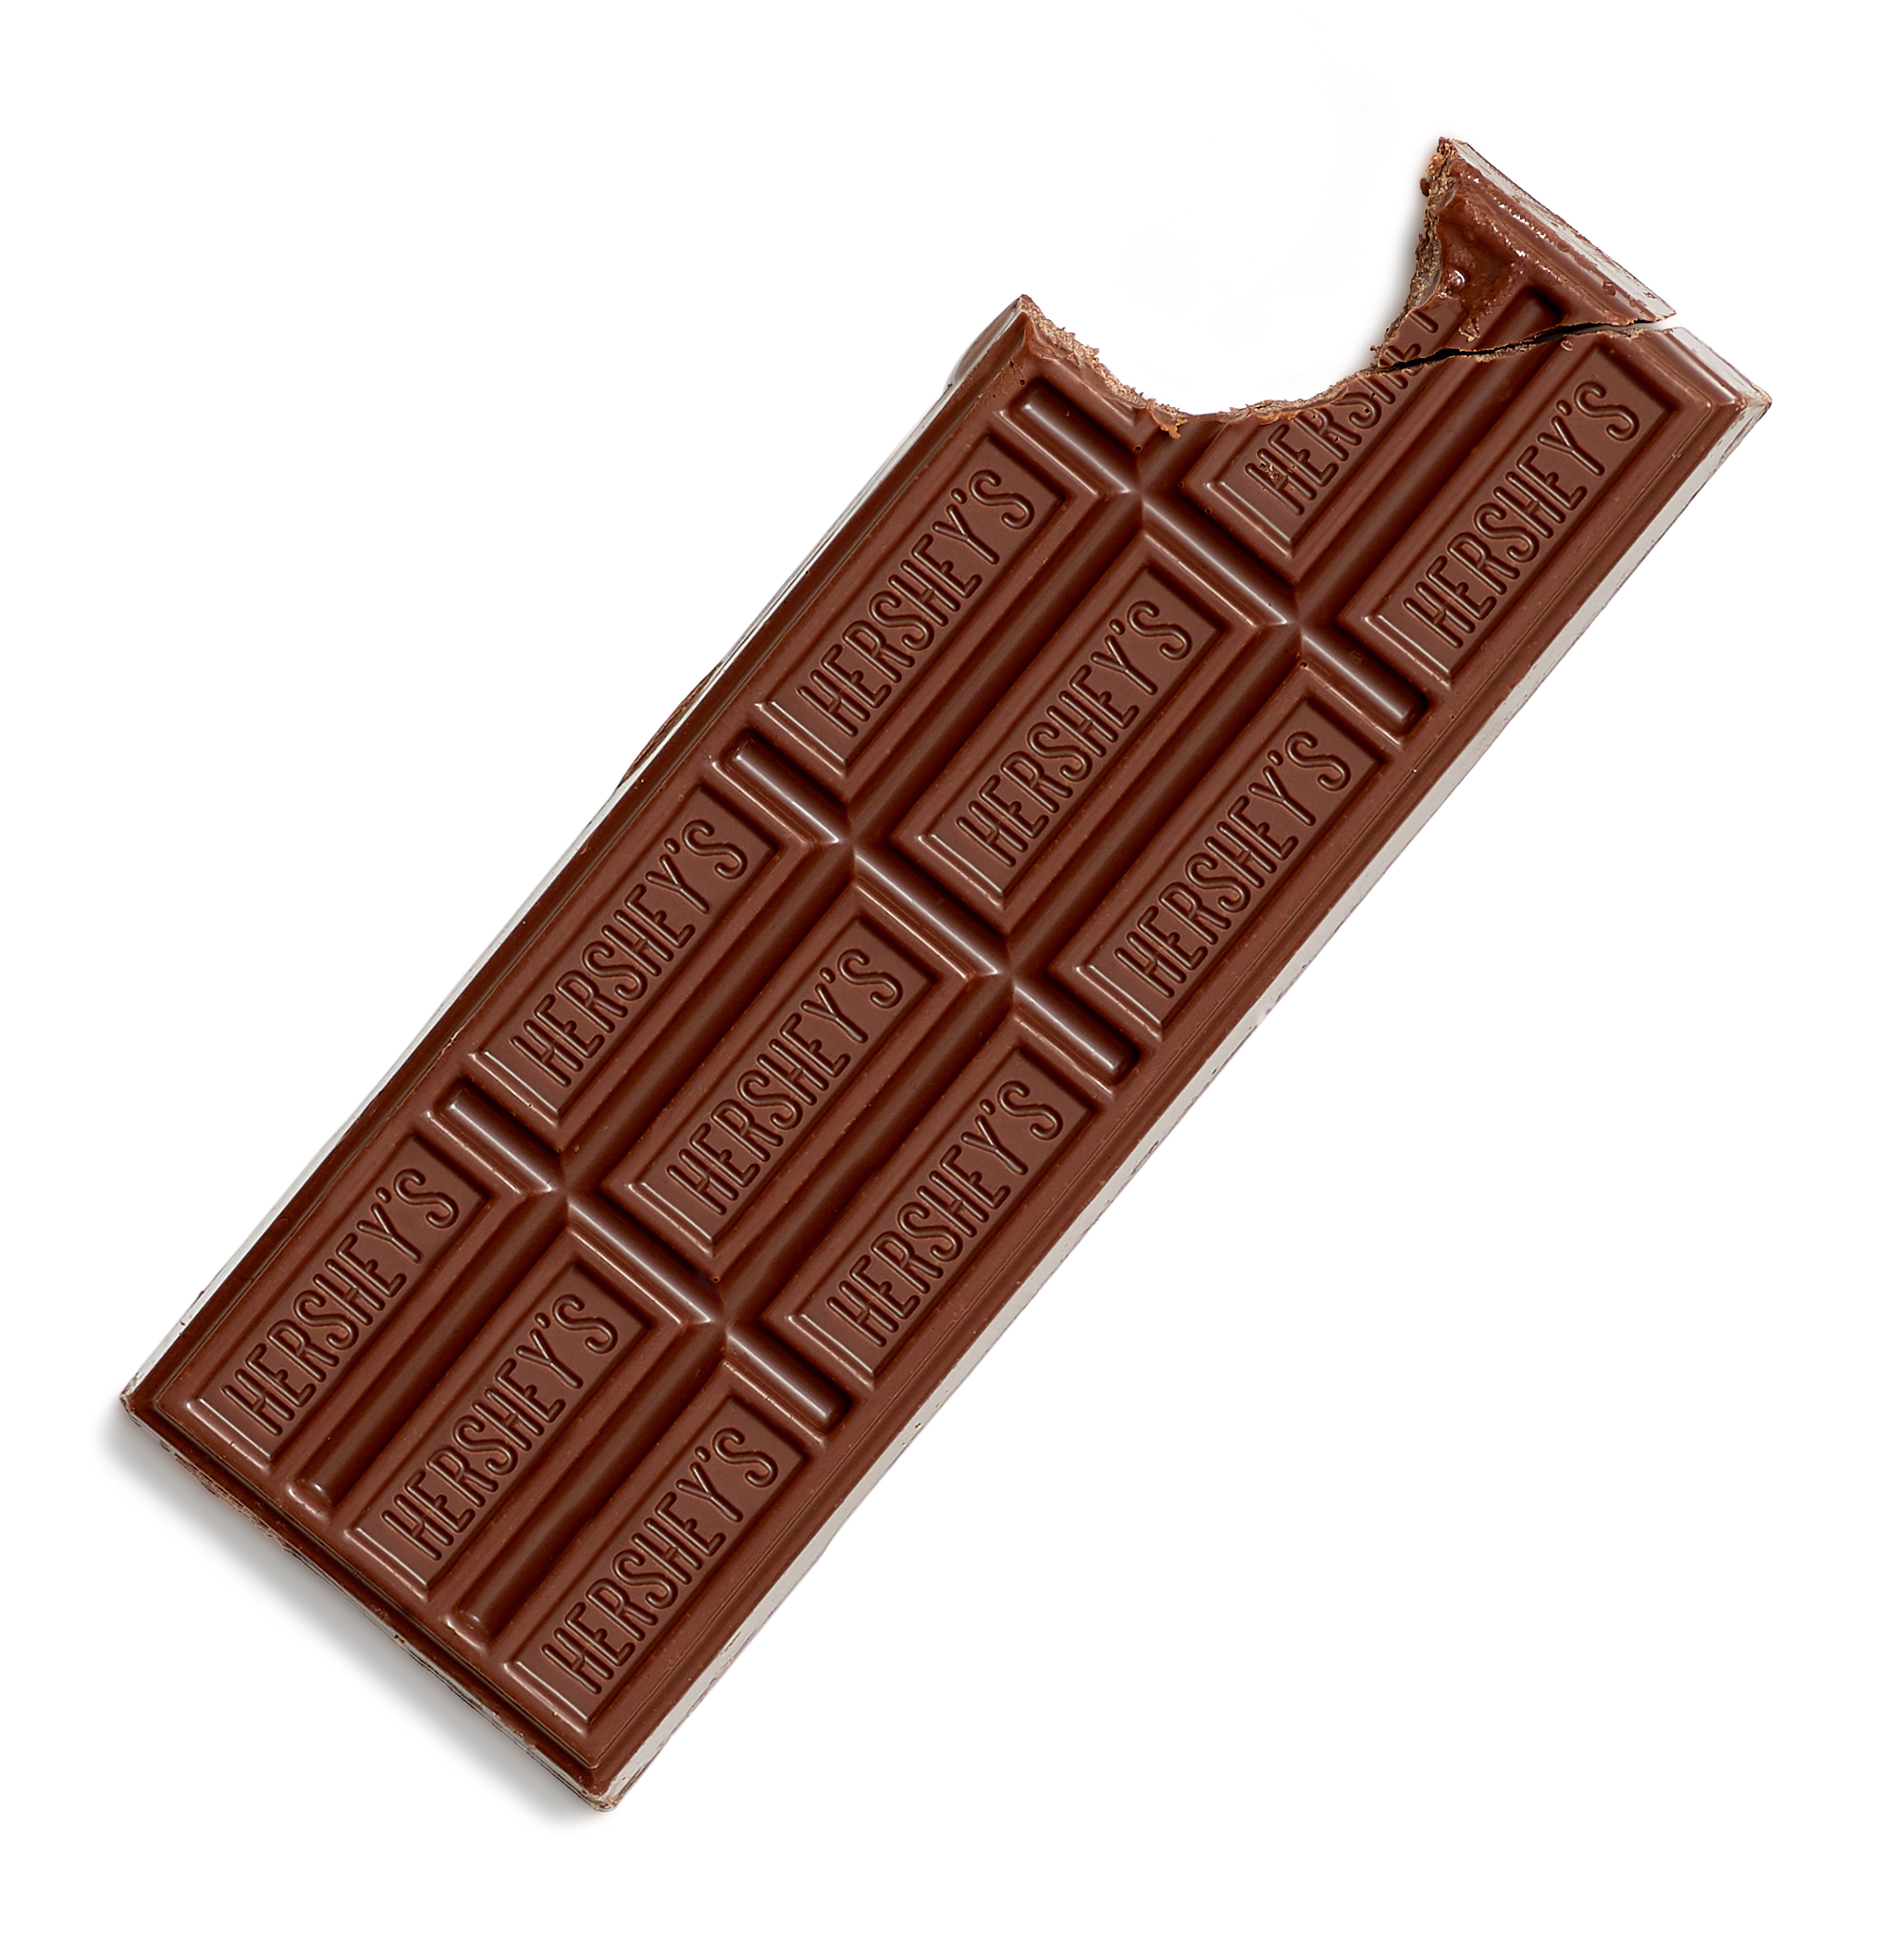 popular chocolate bars